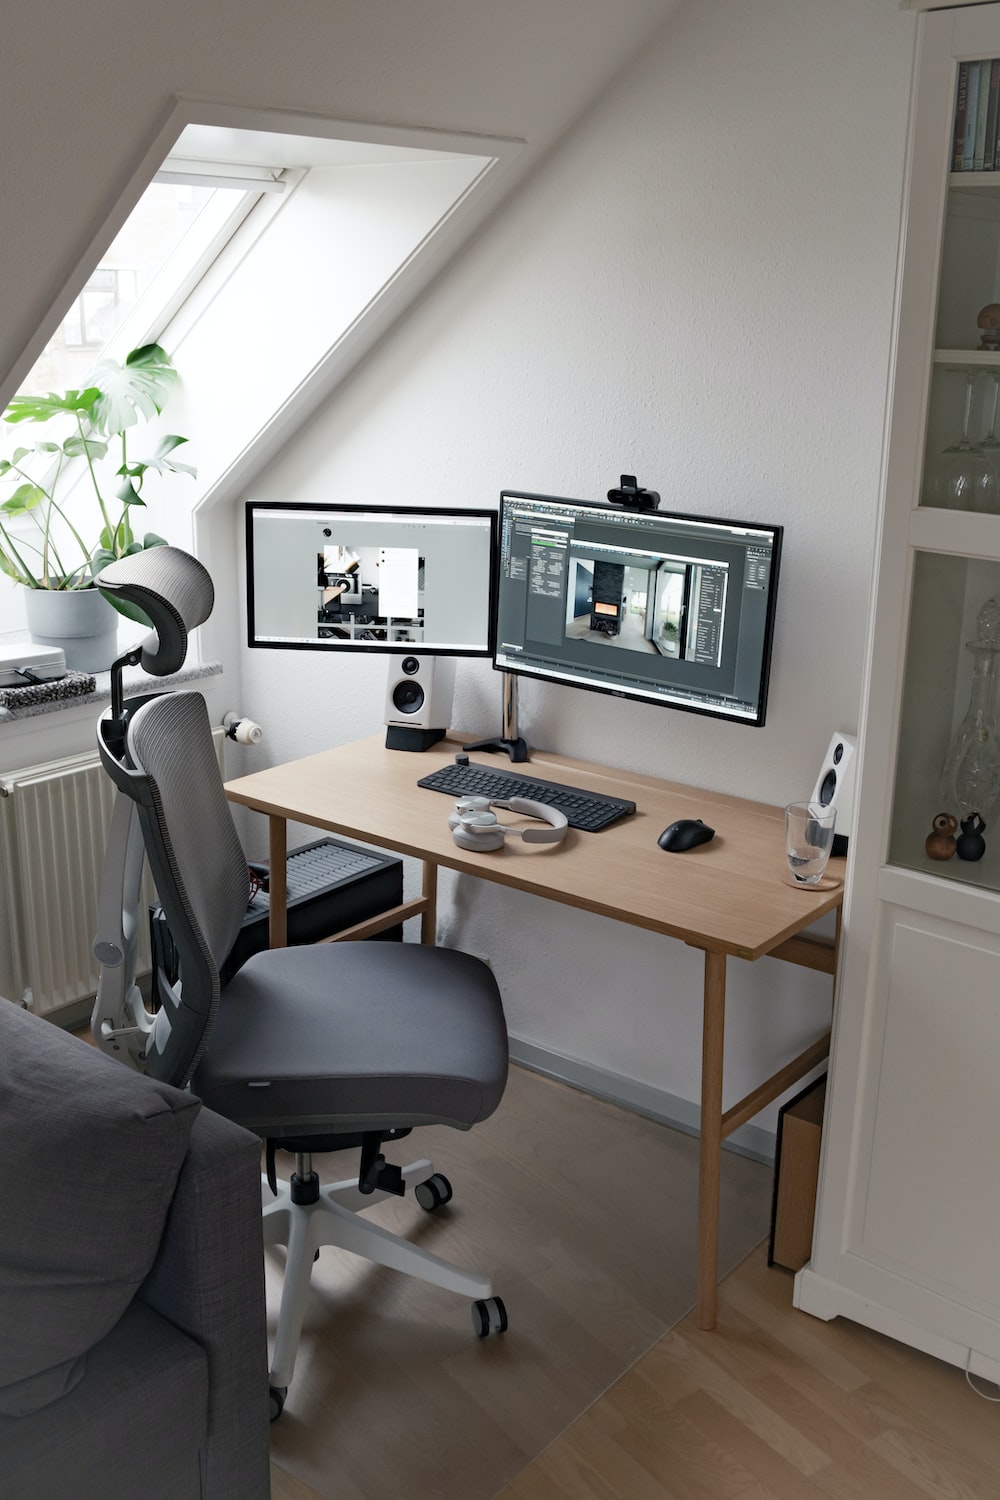 How do you arrange an office with 3 desks?